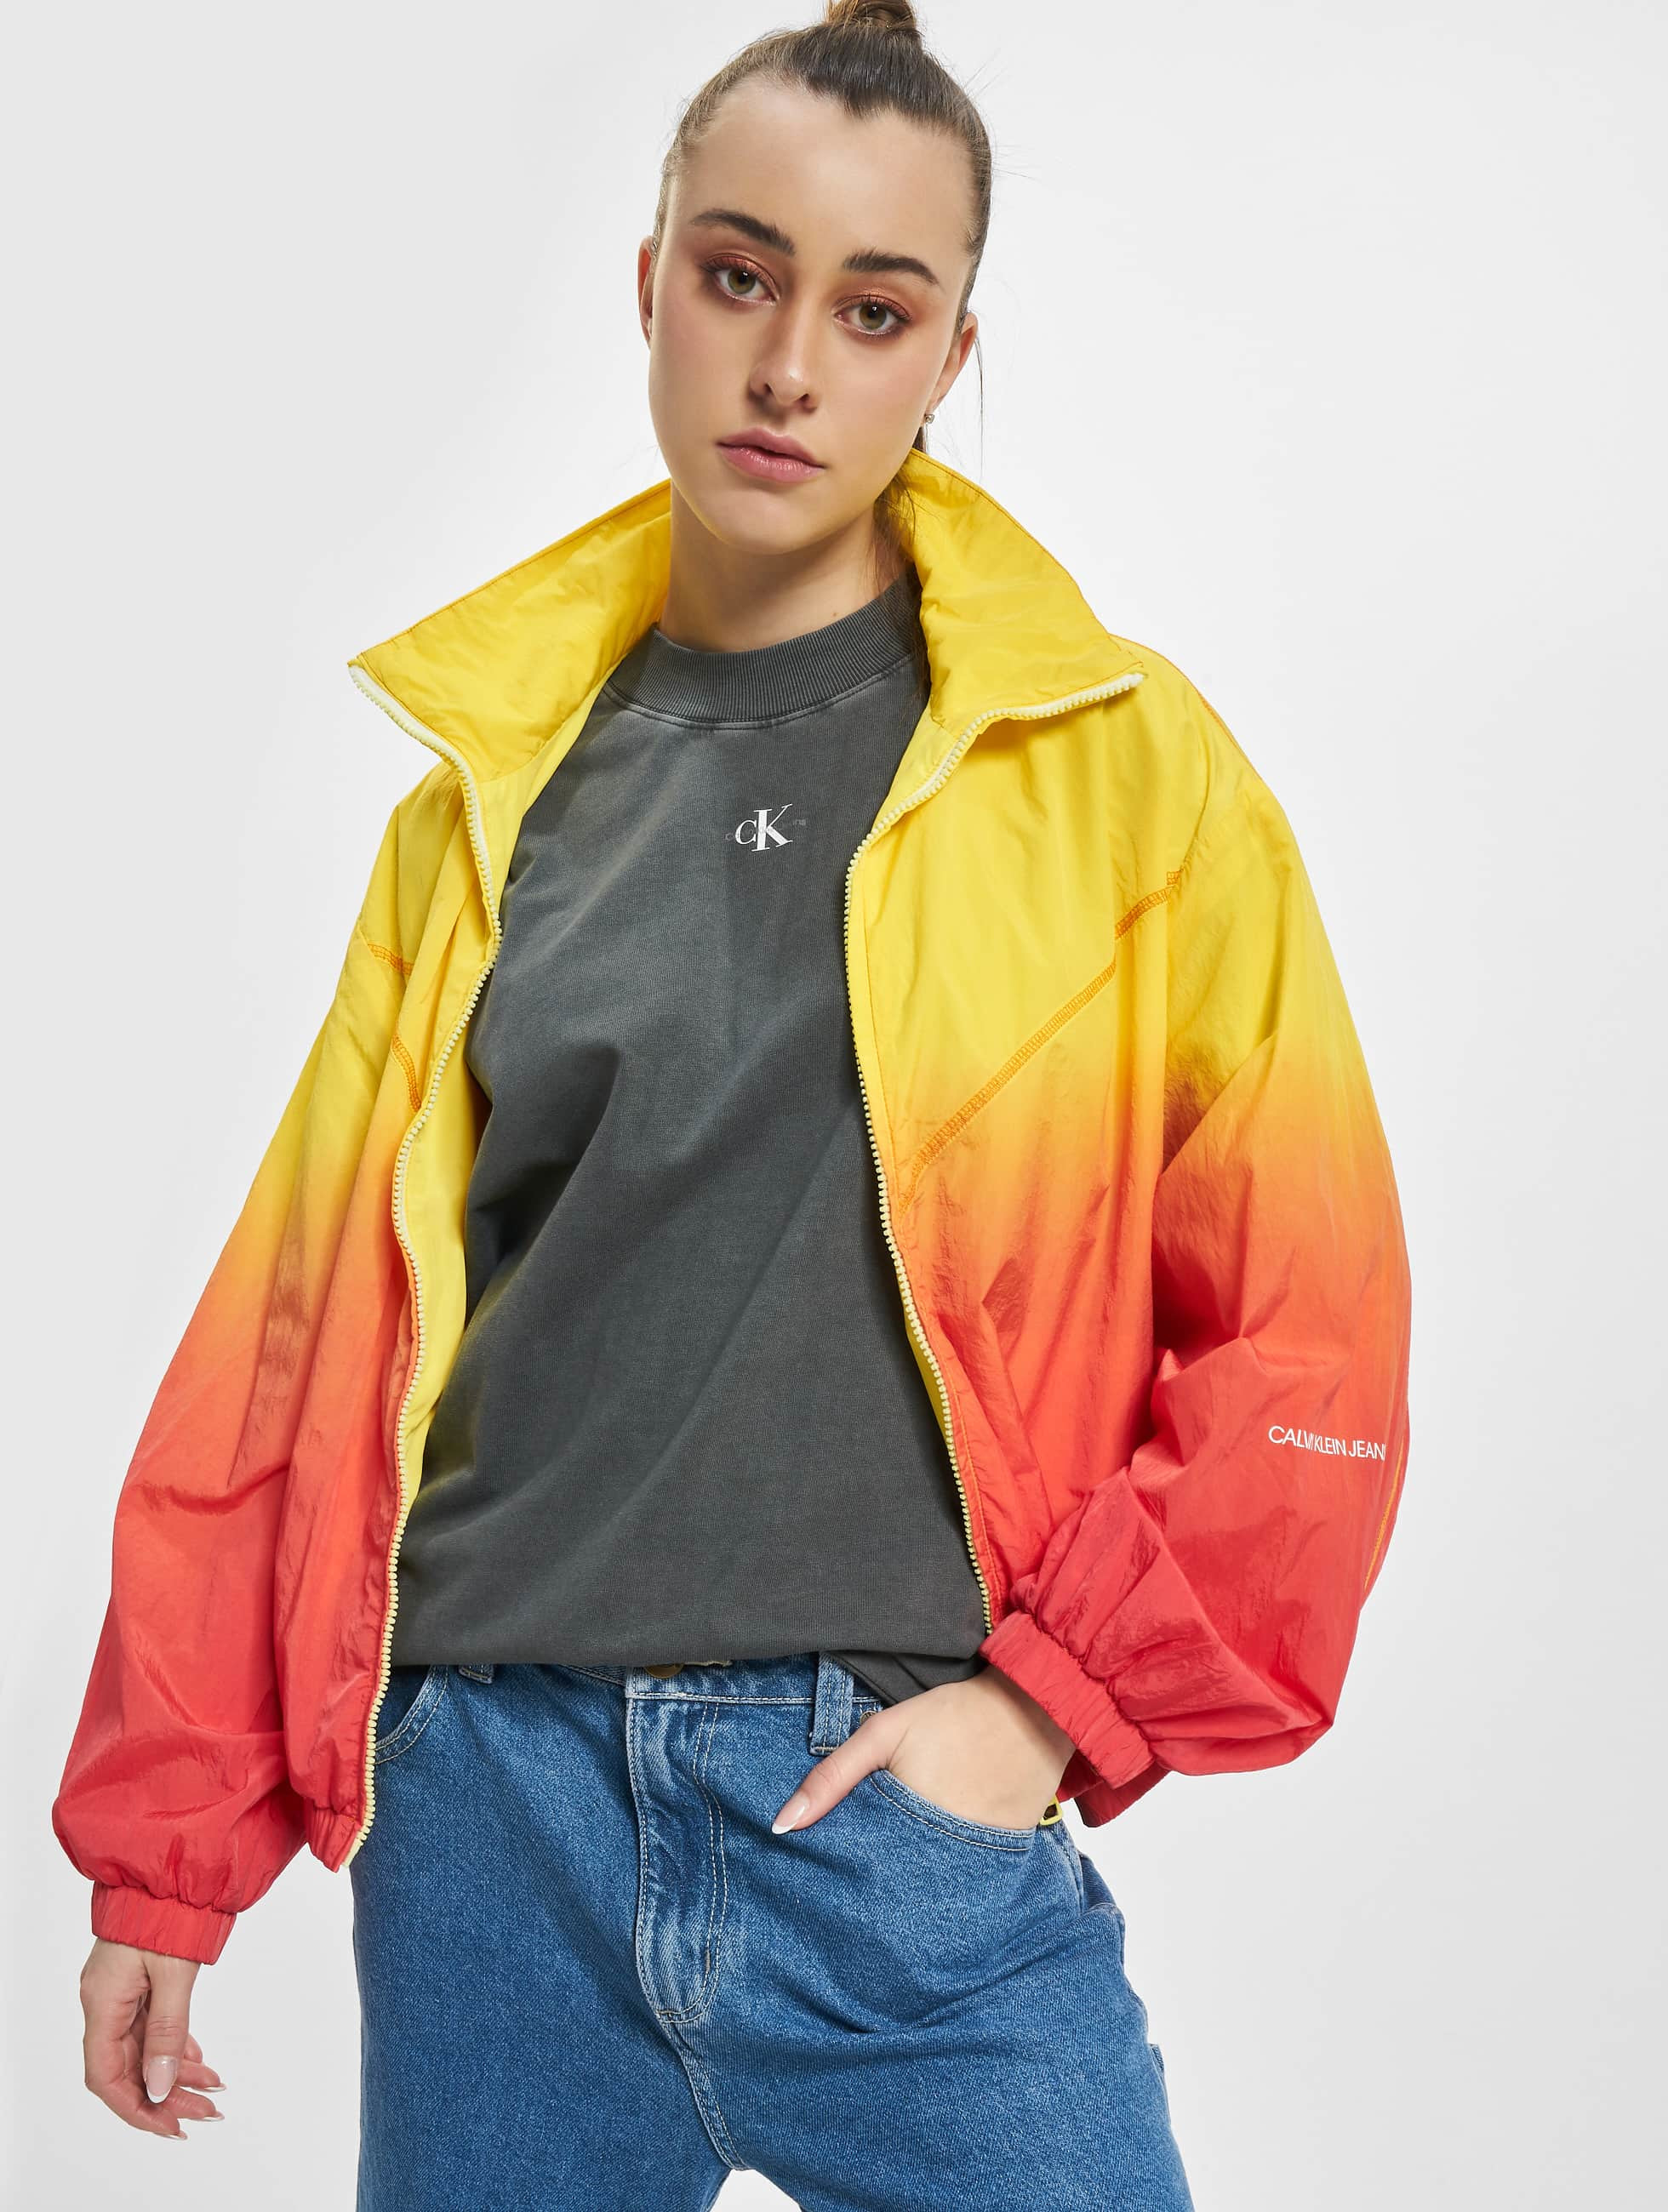 Calvin Klein Jacket / Lightweight Jacket Dip Dye in yellow 970751